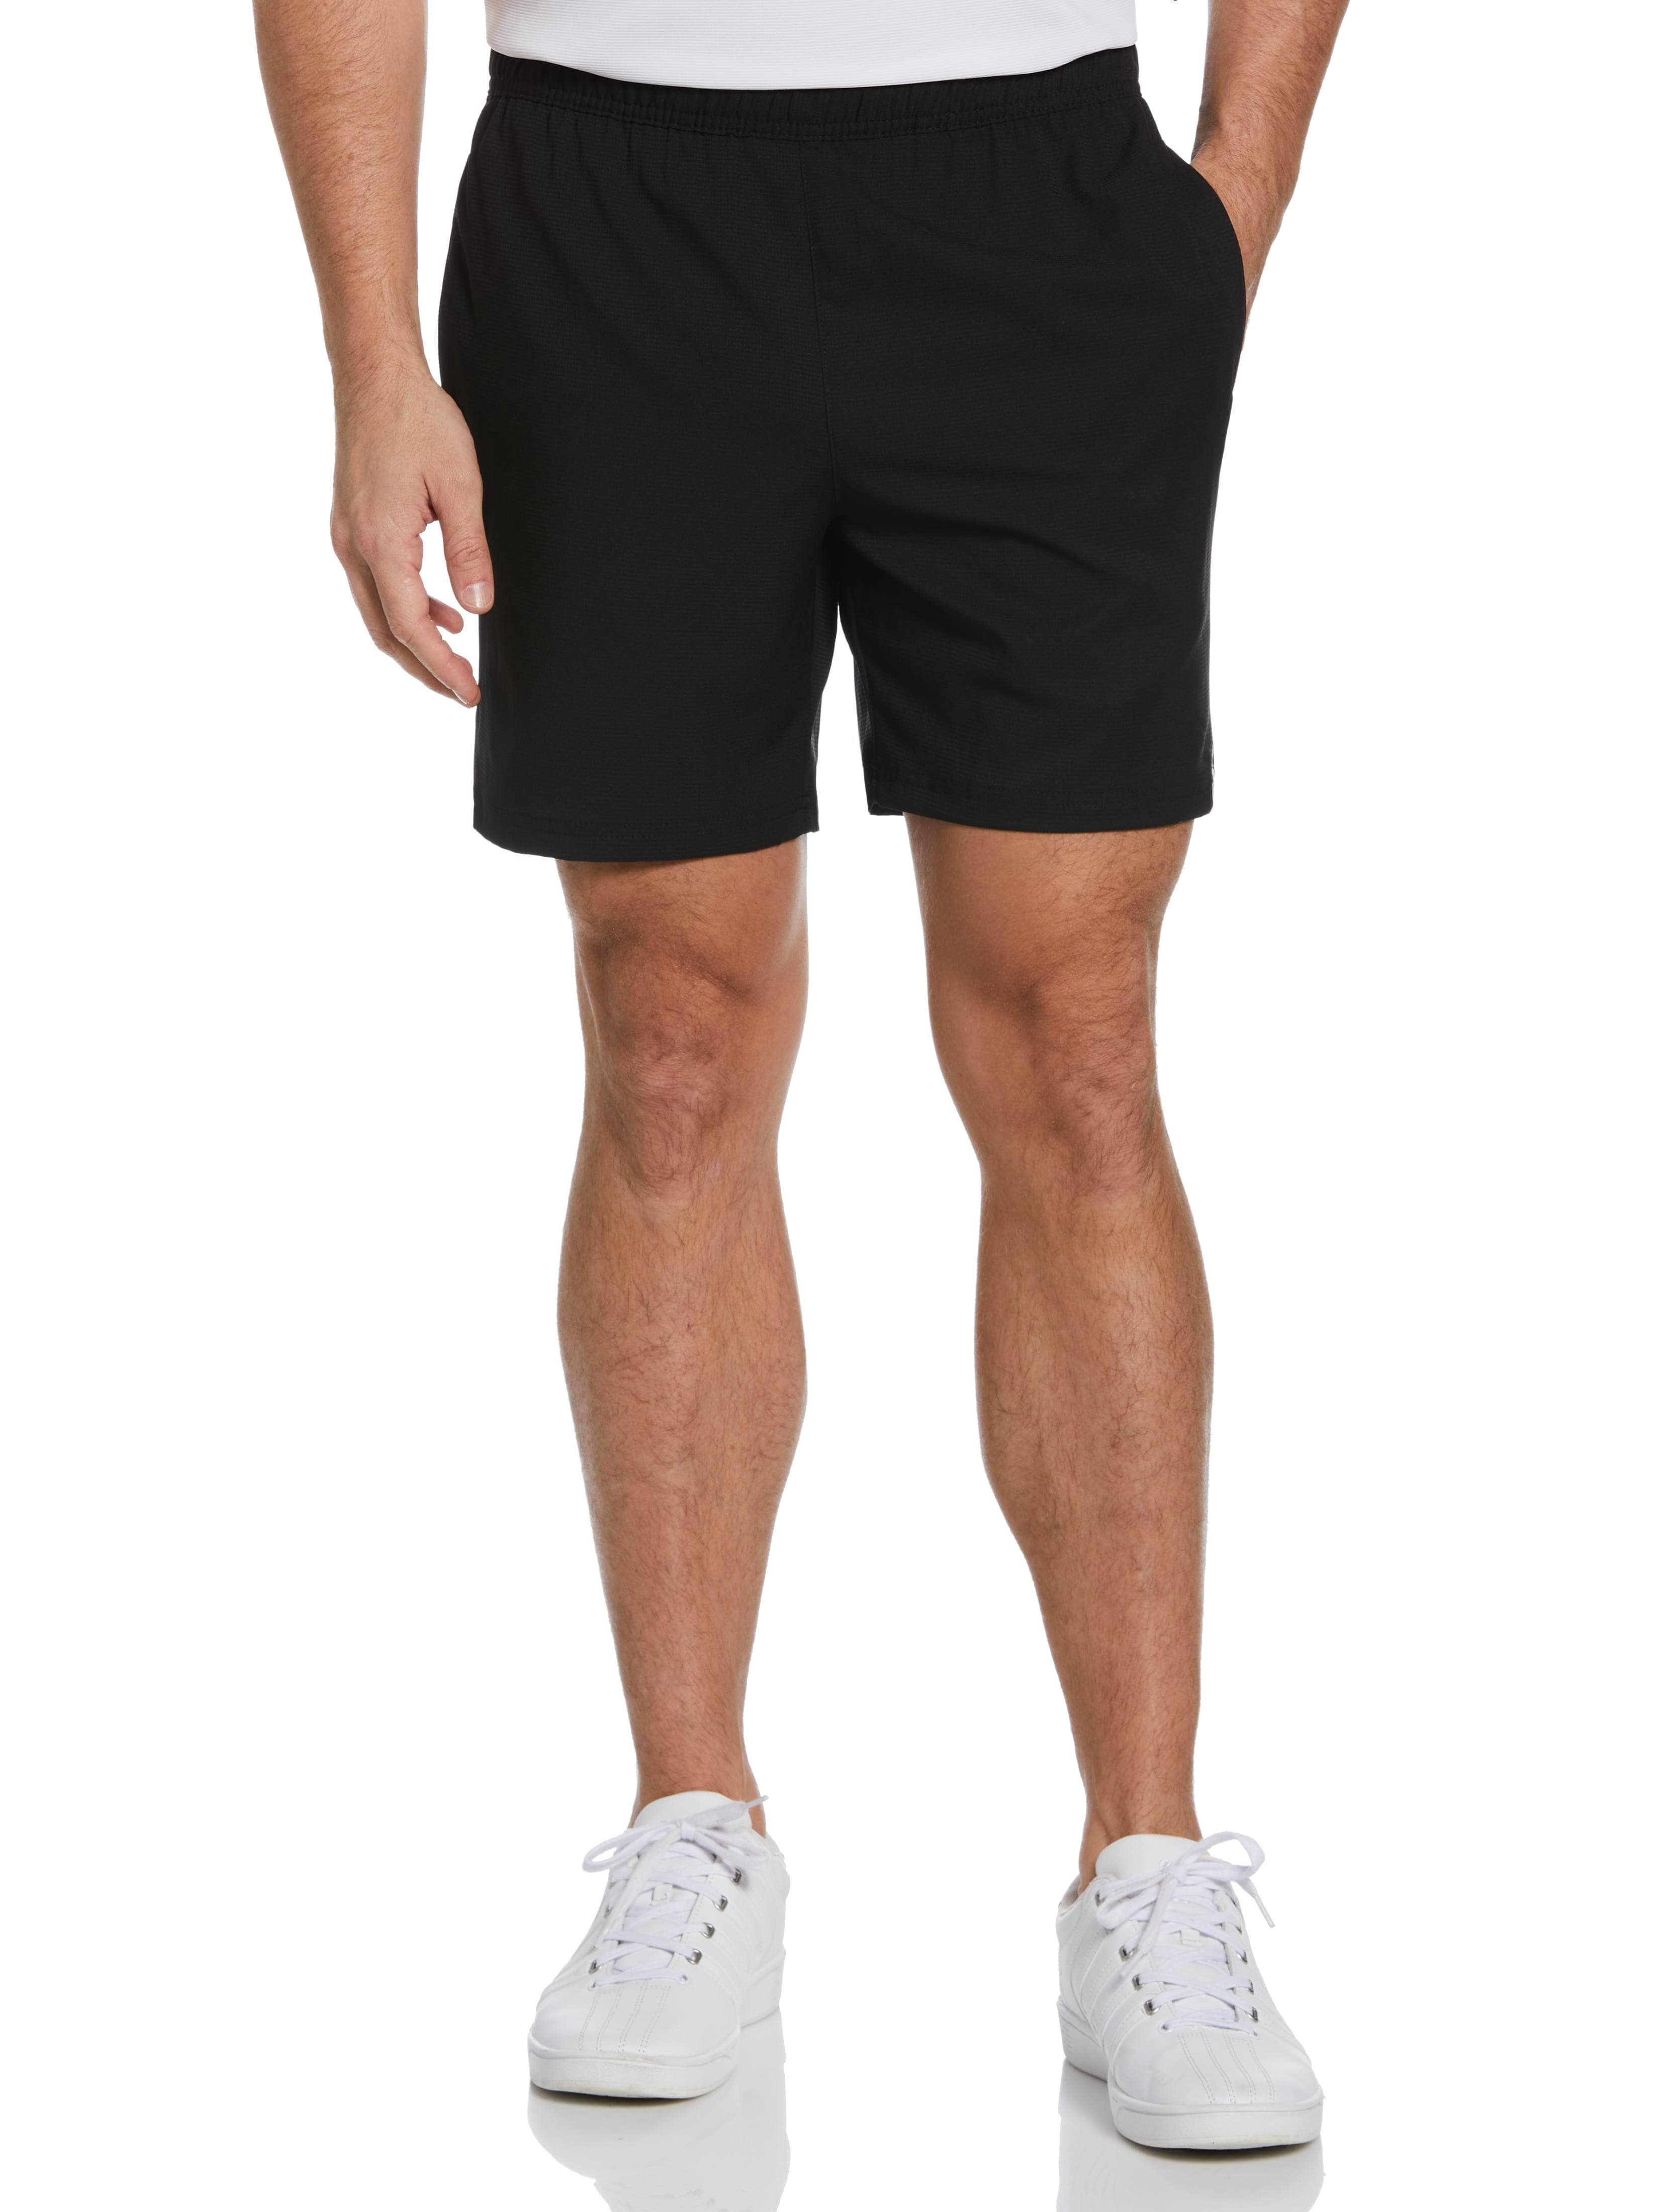 Grand Slam Mens Athletic Tennis Short, Size Medium, Black, Polyester/Elastane | Golf Apparel Shop